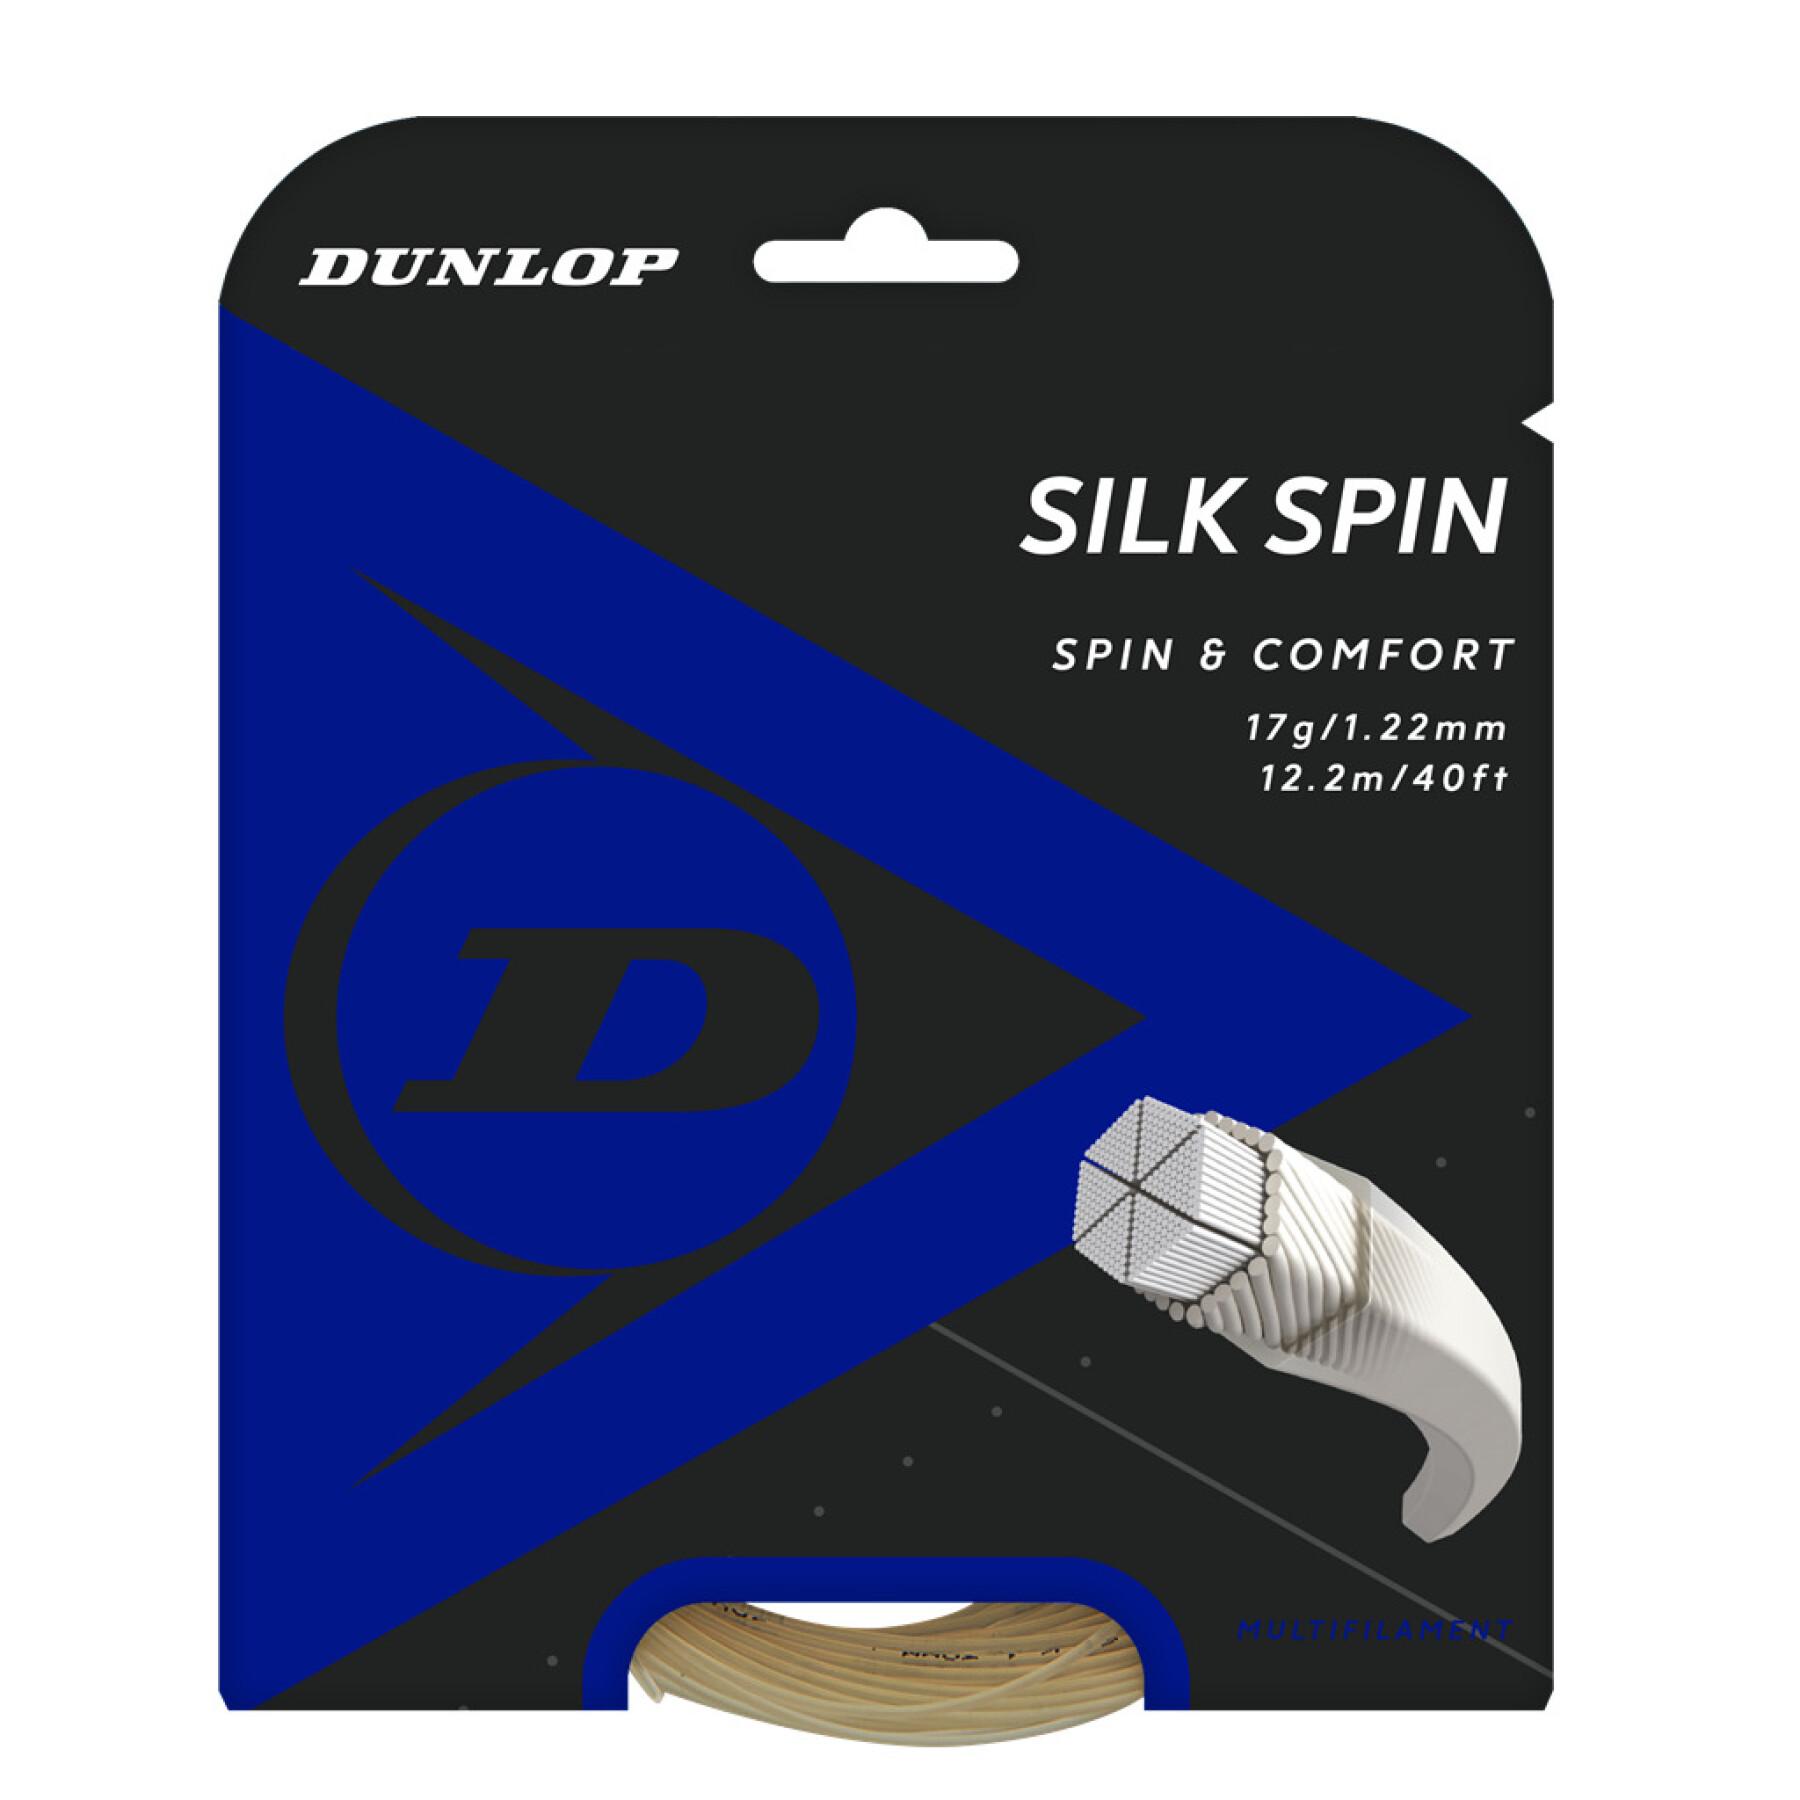 Rope Dunlop silk spin